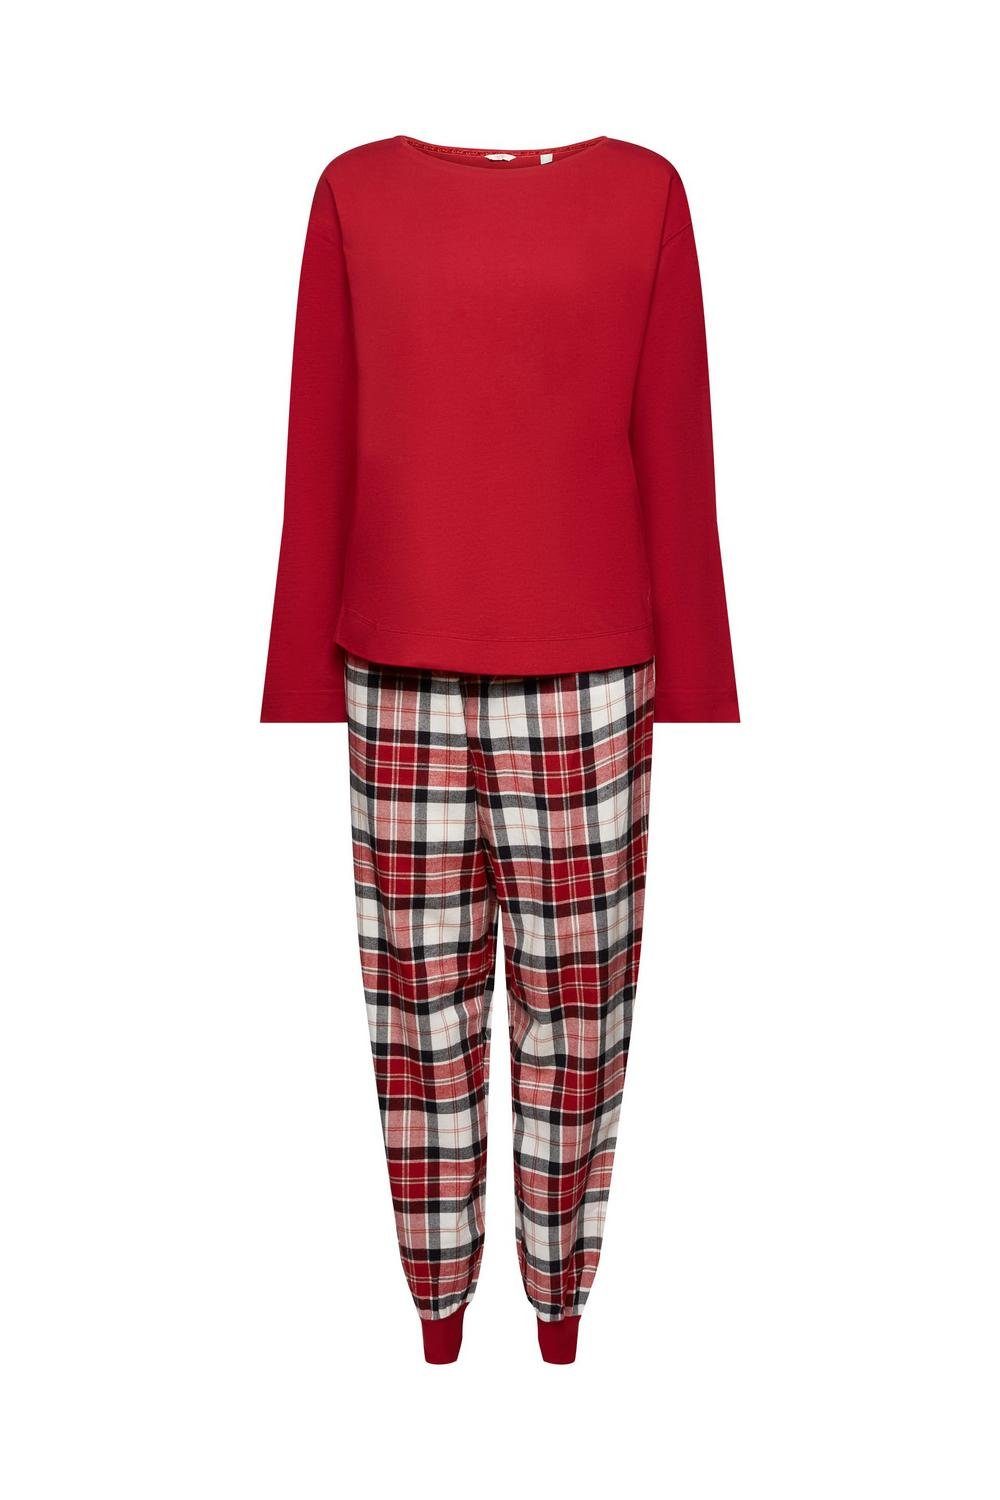 Esprit Pyjama FLANNEL CHECK WV NW SUS pj.ll.ls., RED 3